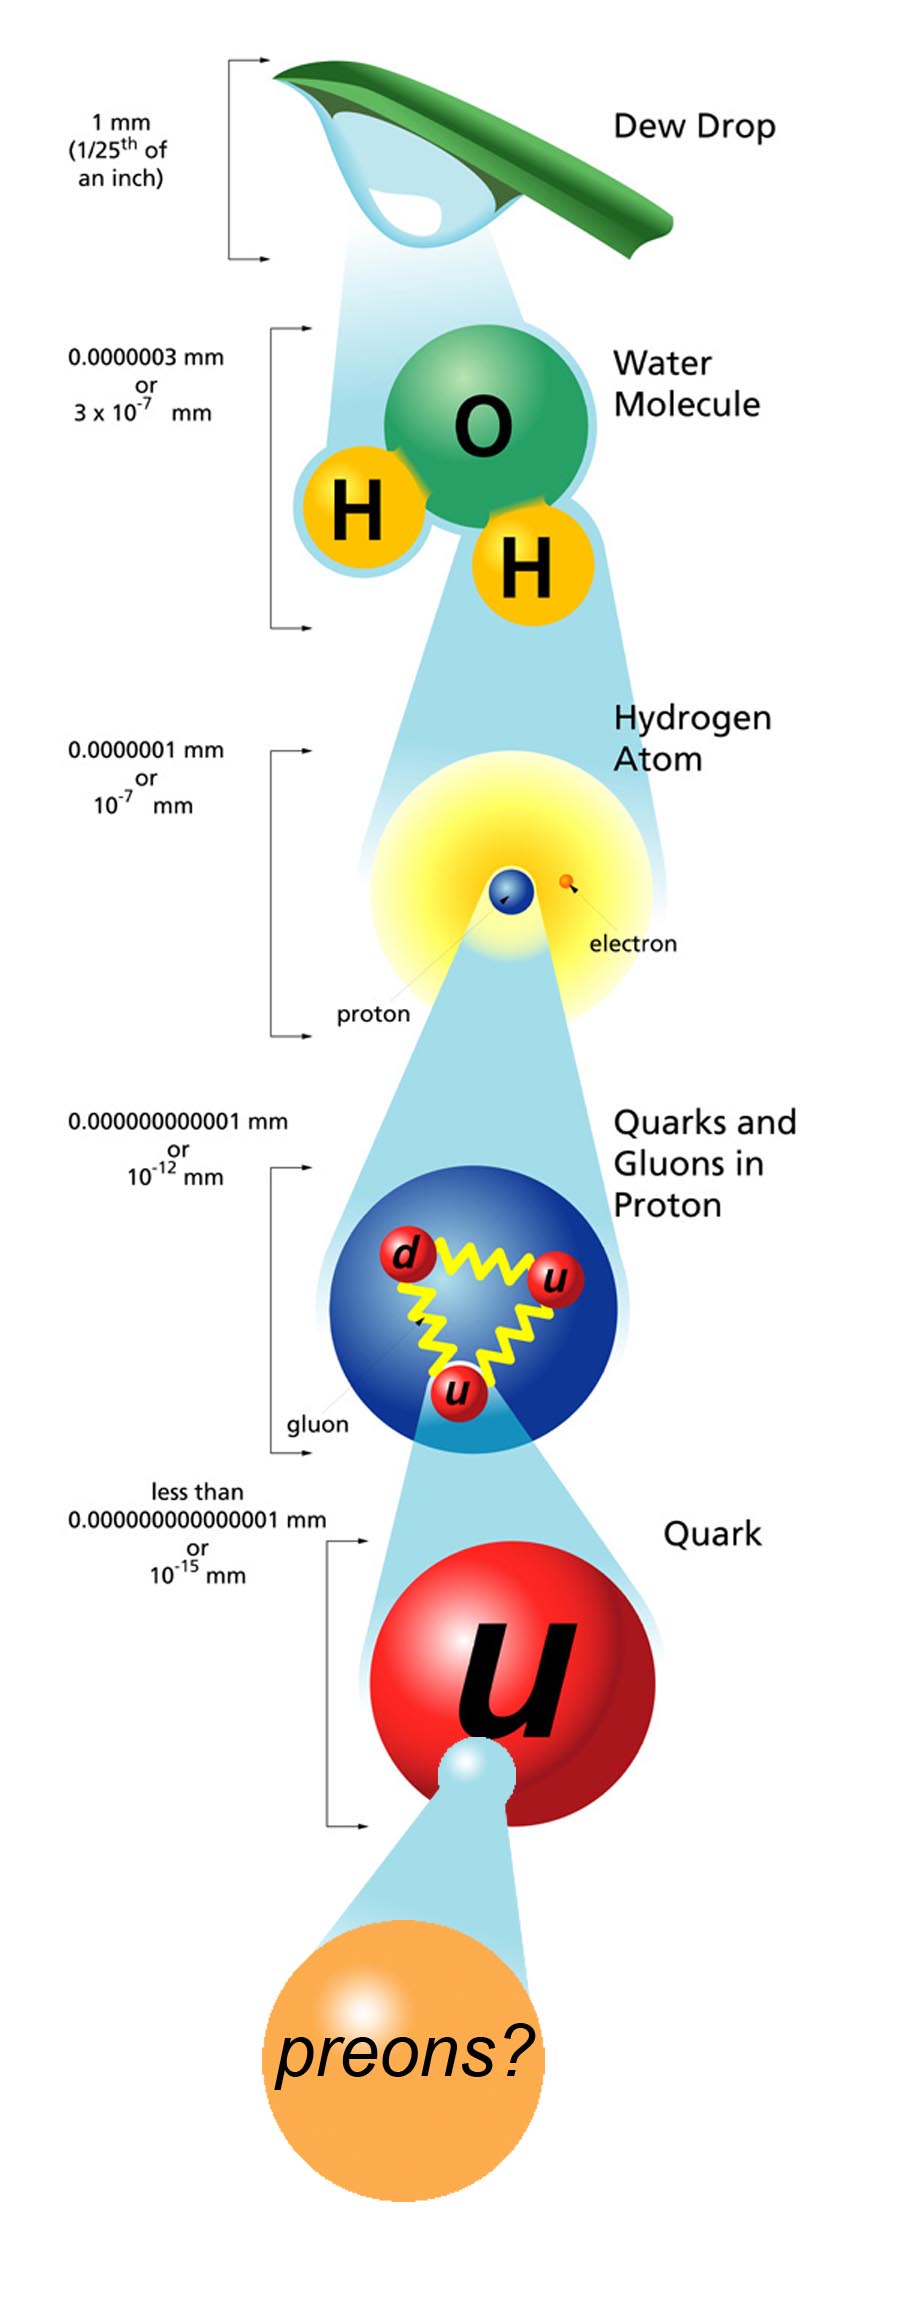 What's smaller than quark?